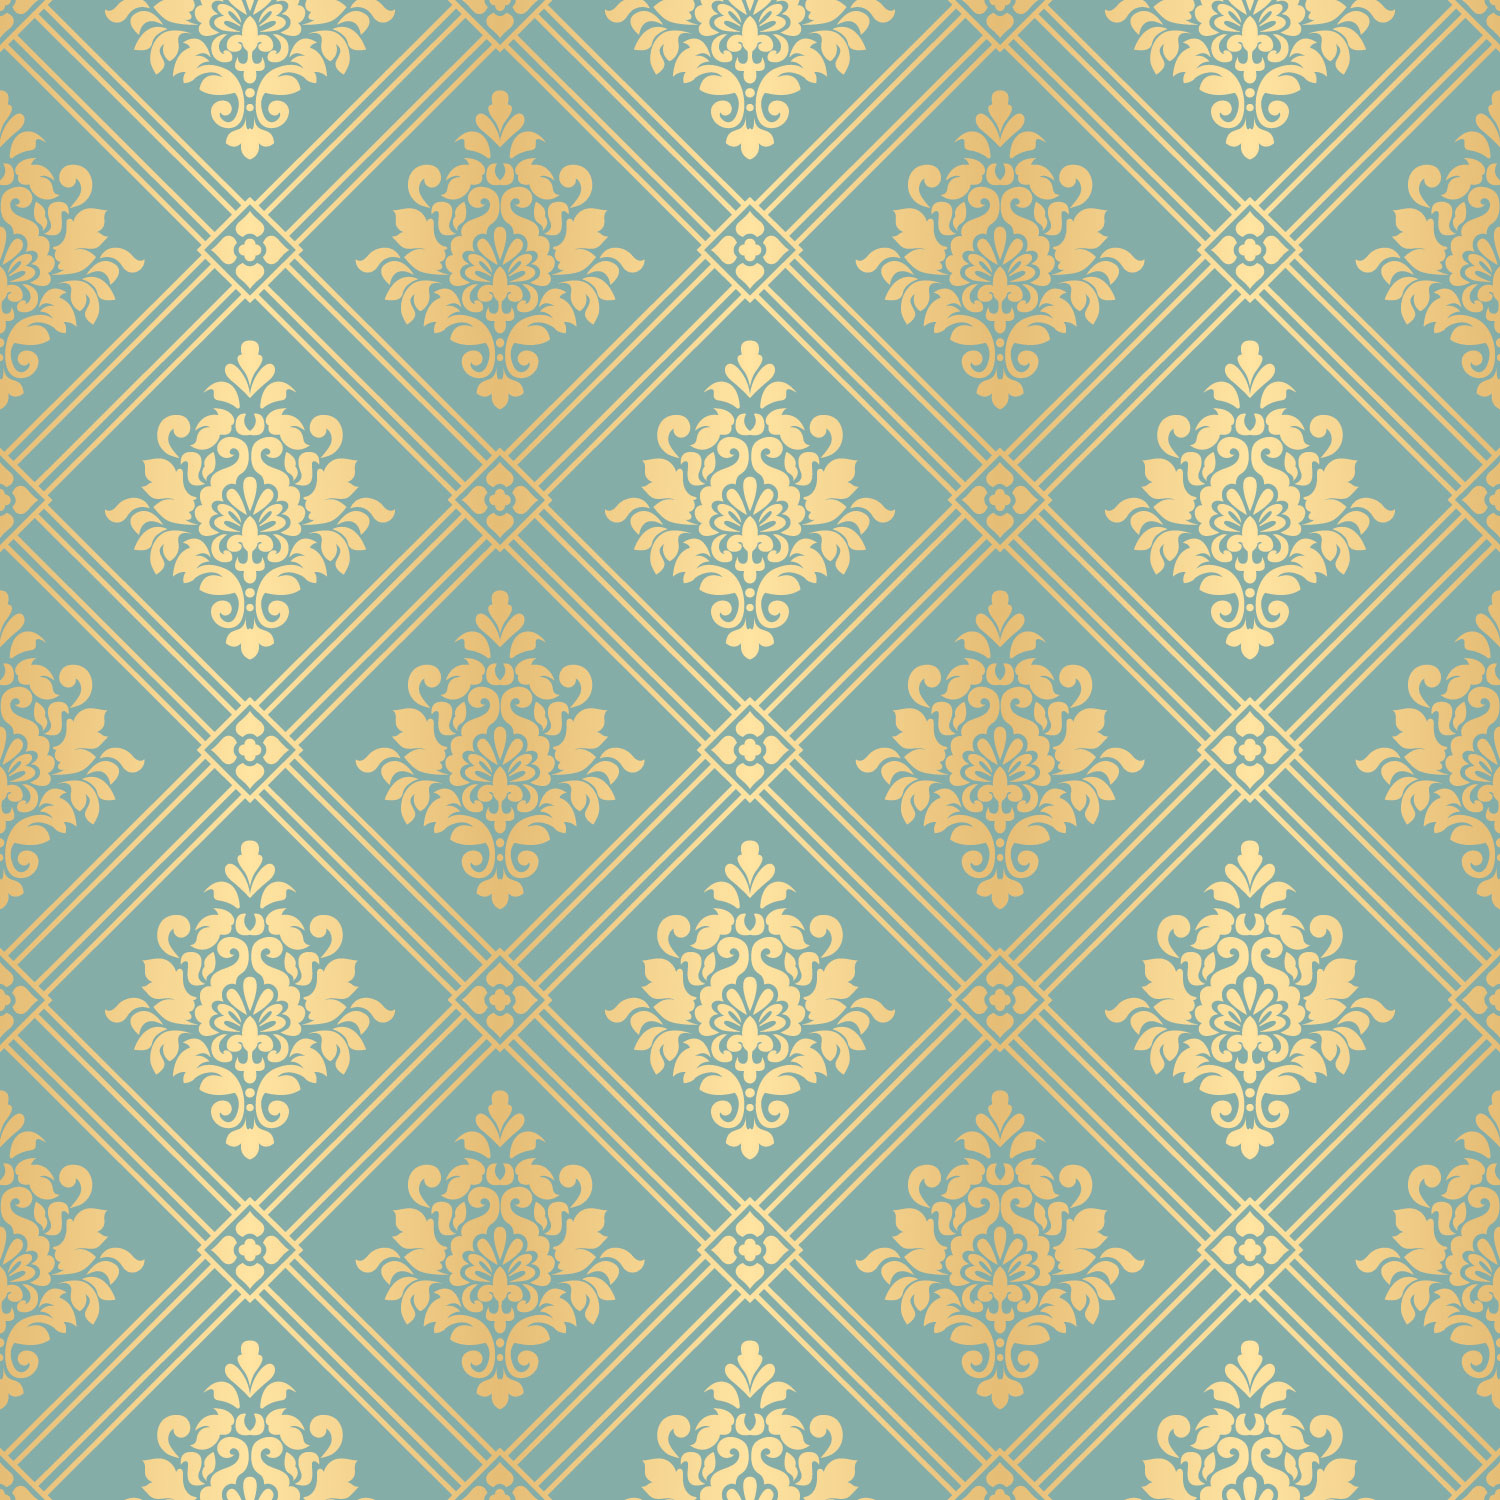 königliche tapetenentwürfe,muster,blau,linie,aqua,symmetrie